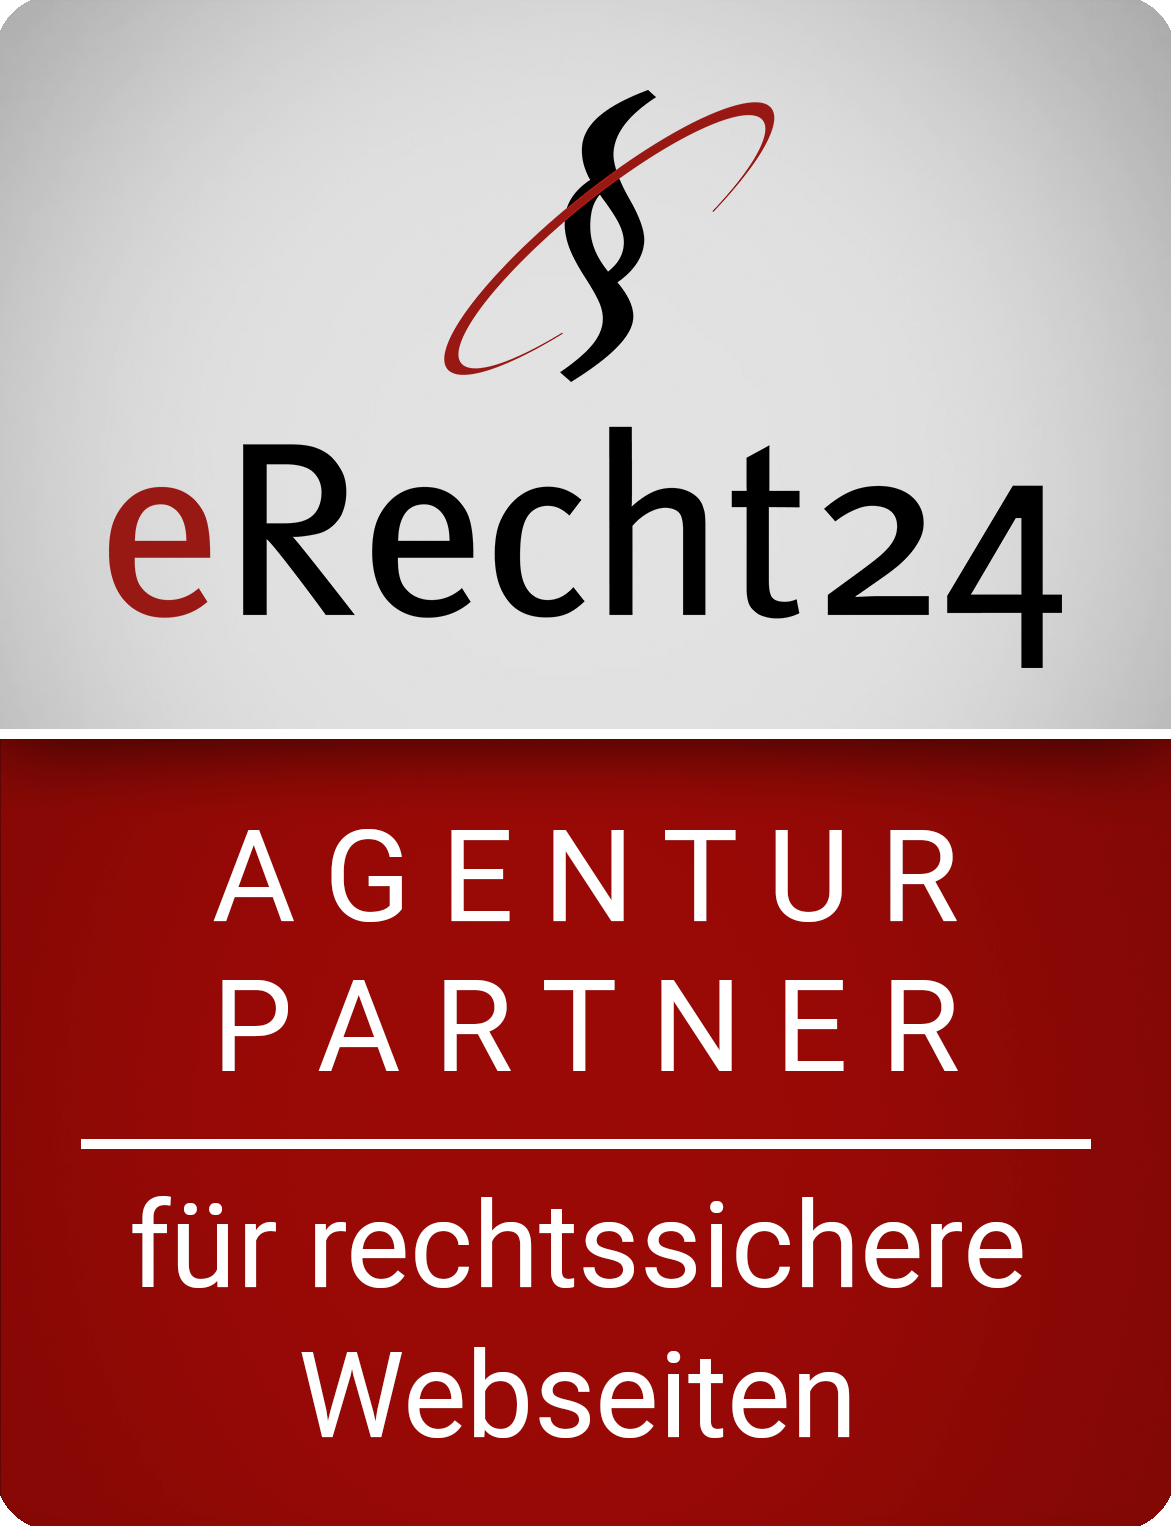 erecht24-siegel-agenturpartner-rot-gross